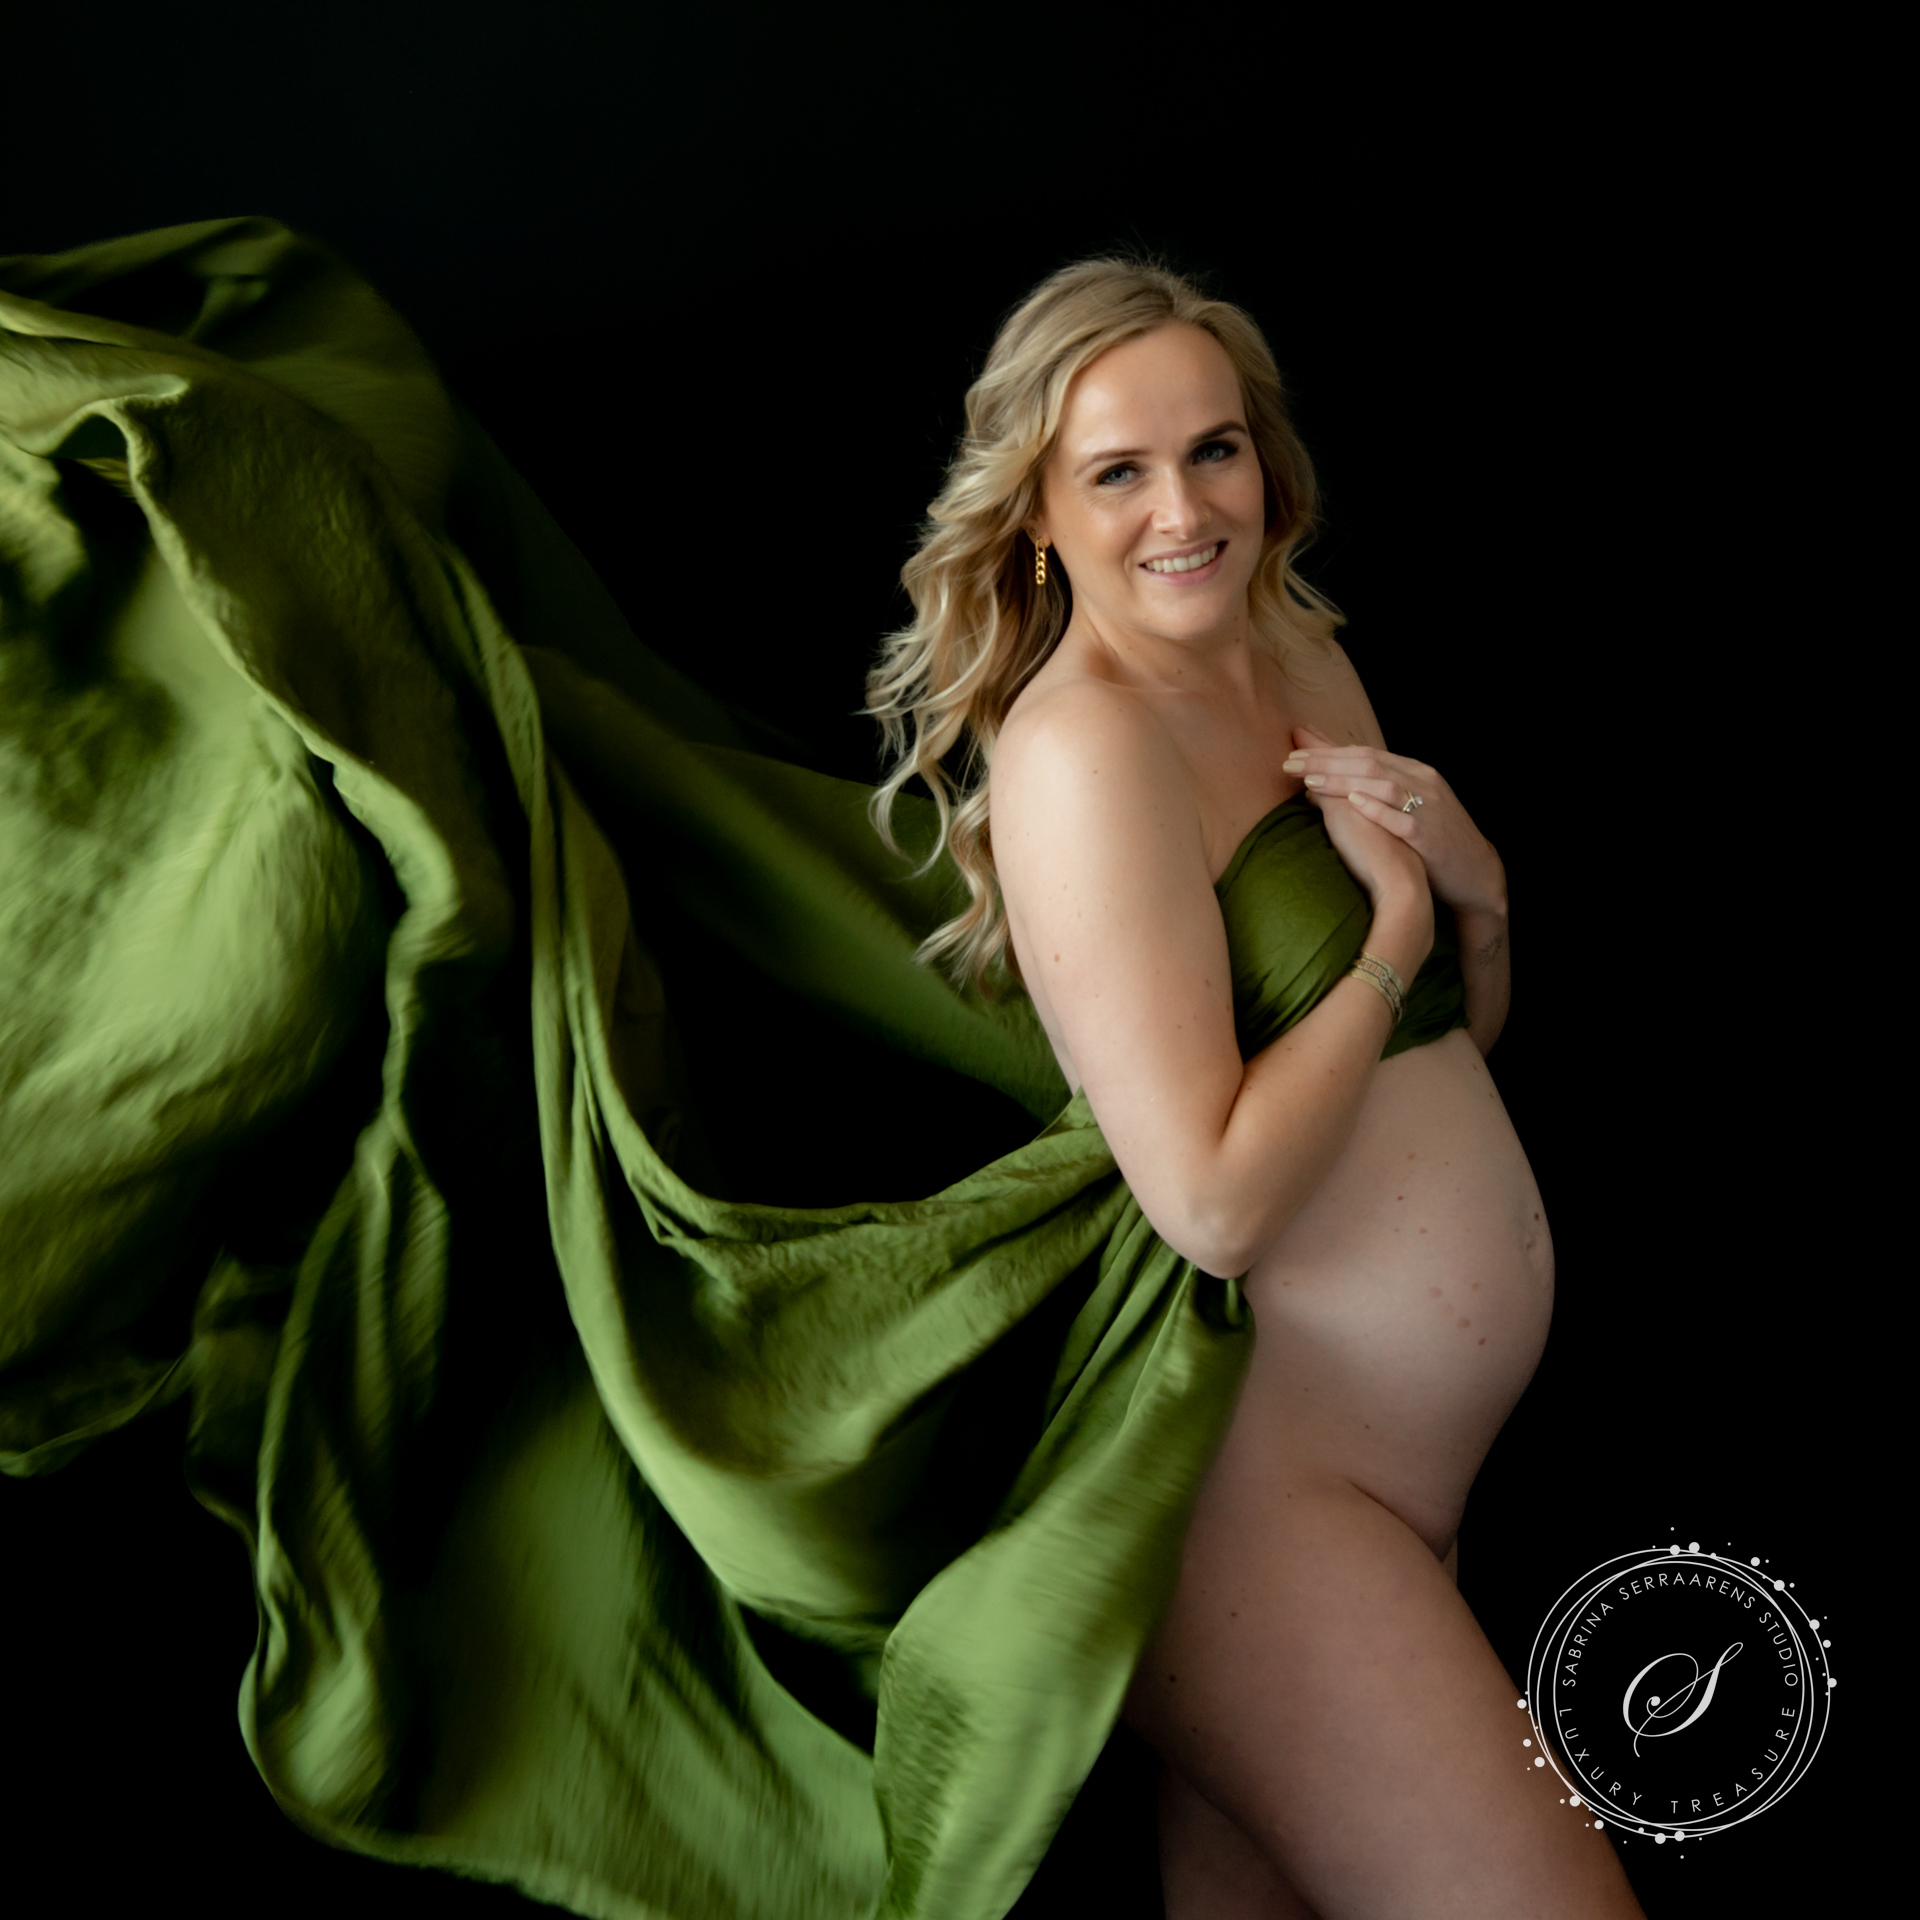 zwangerschapsfotografie voorne putten